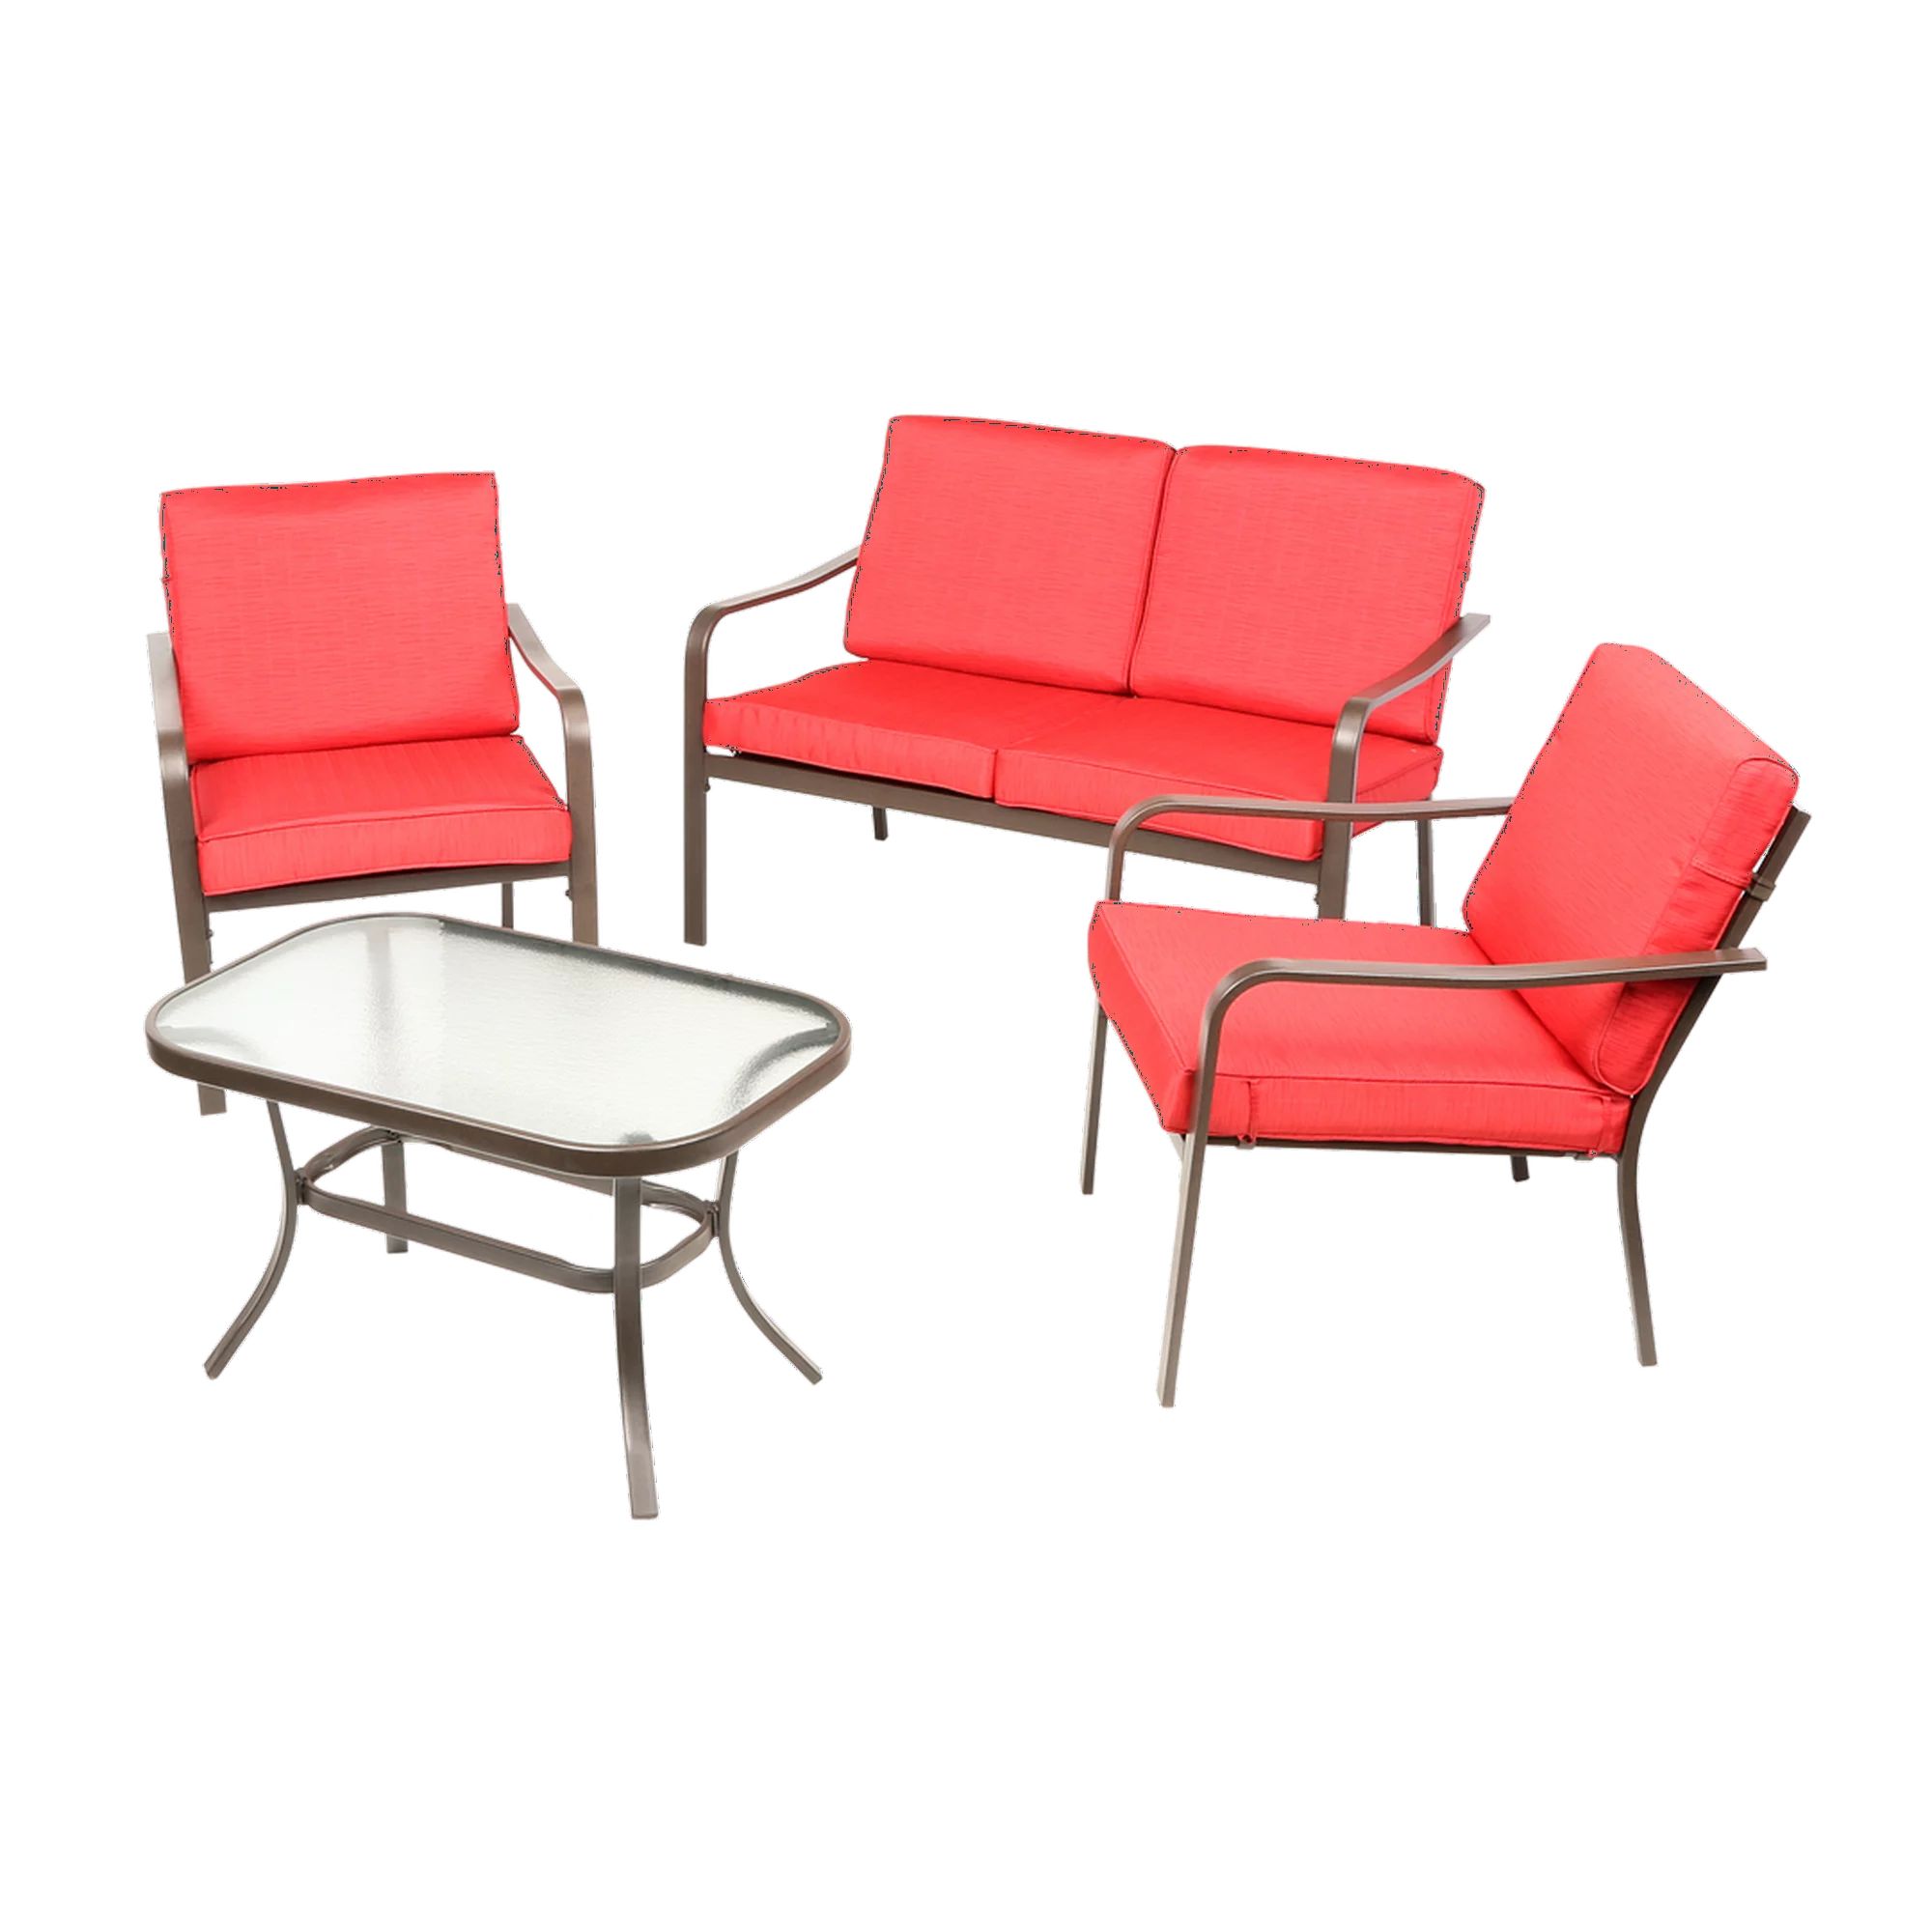 Mainstays Stanton 4-Piece Patio Furniture Conversation Set, Red, Metal | Walmart (US)